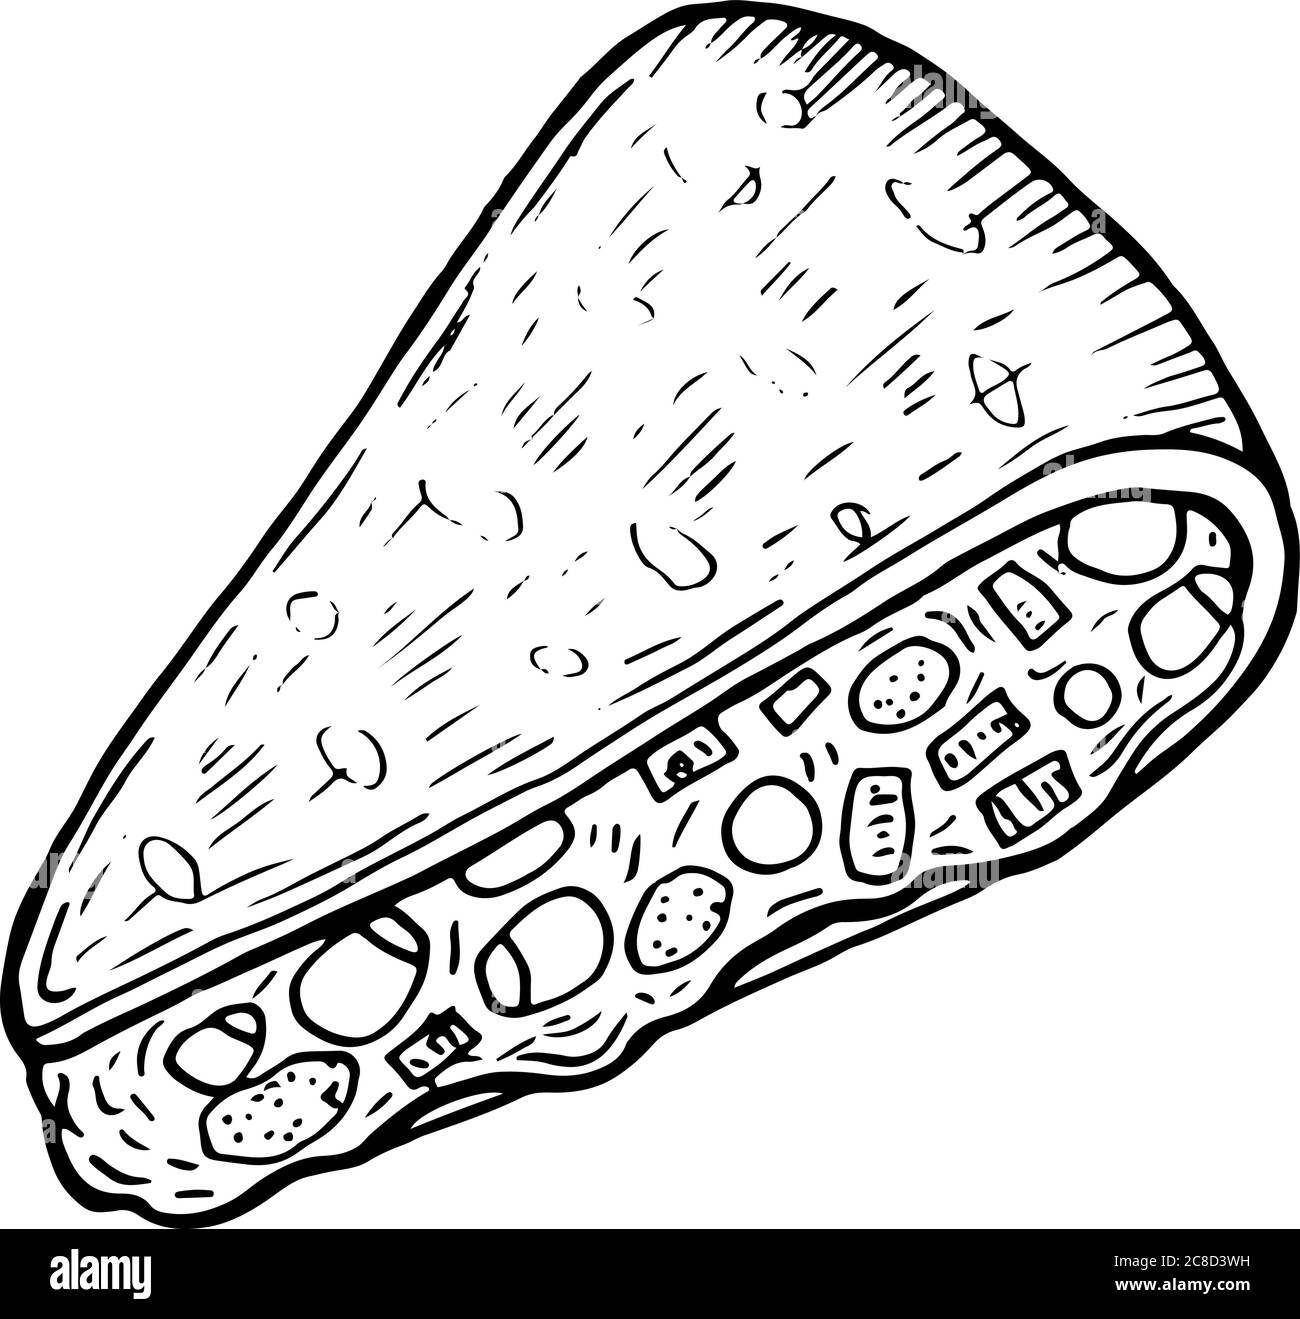 Mexikanische Lebensmittel quesadilla - Färbung Seite für Erwachsene. Druckgrafiken. Grafik Doodle Cartoon Art. Vektor-Illustration Stock Vektor